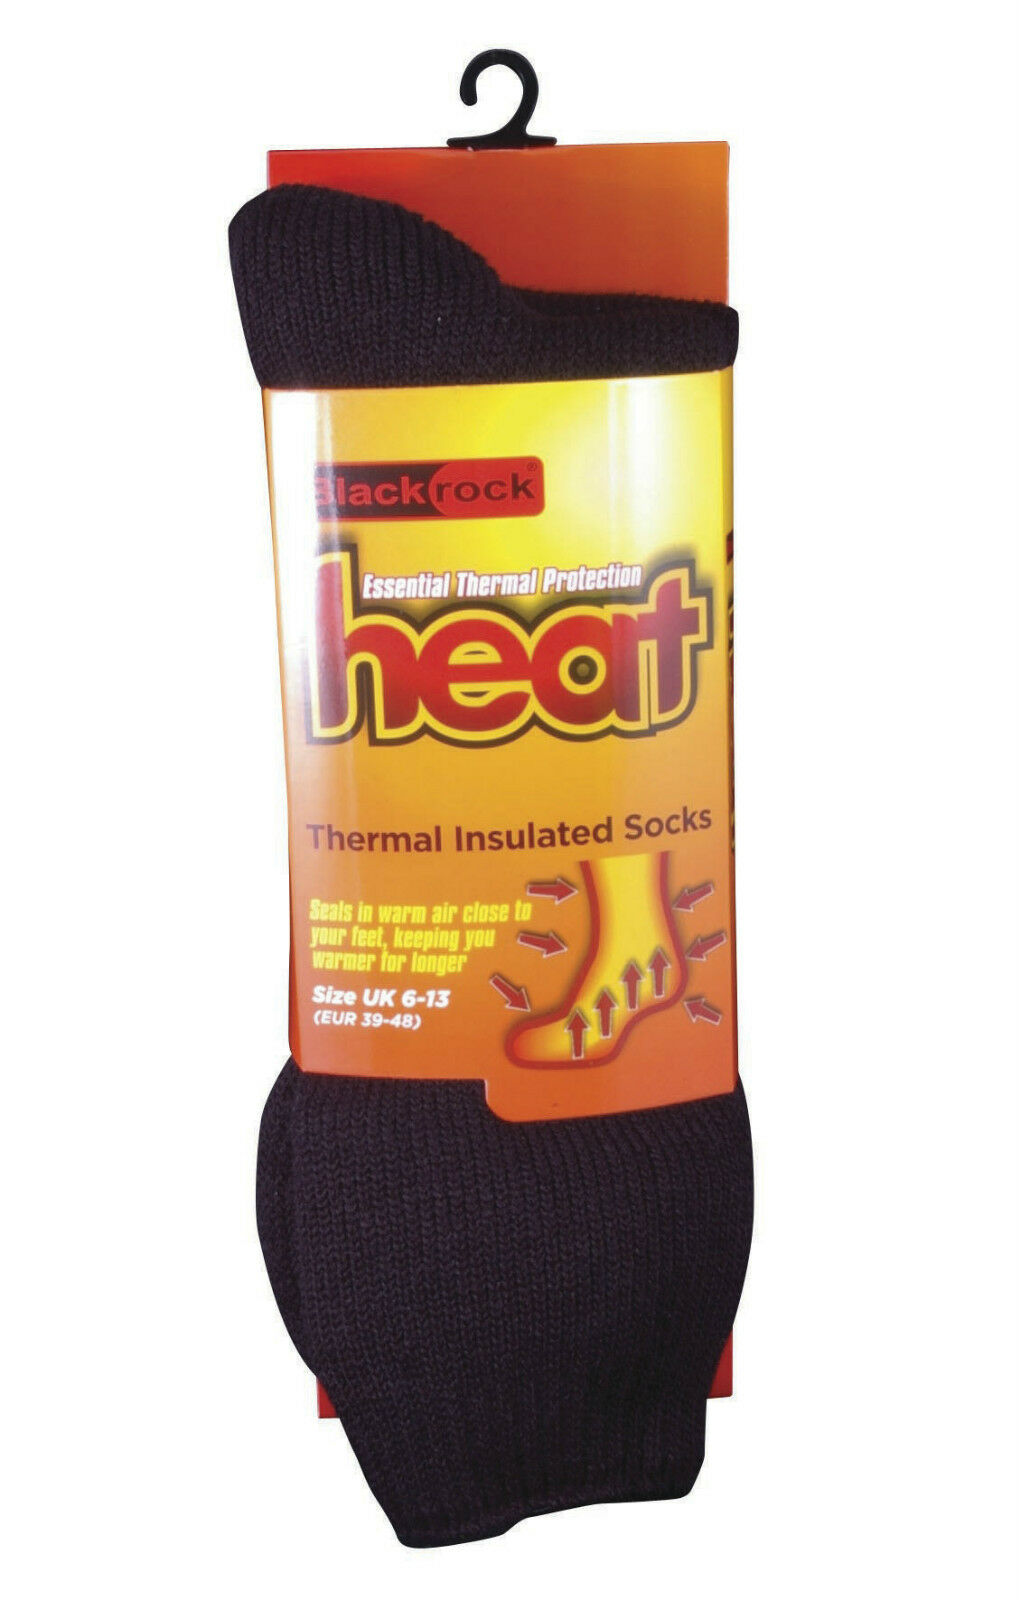 Blackrock Heat Range Thermal Socks Acrylic Lined Insulation Size 6-13